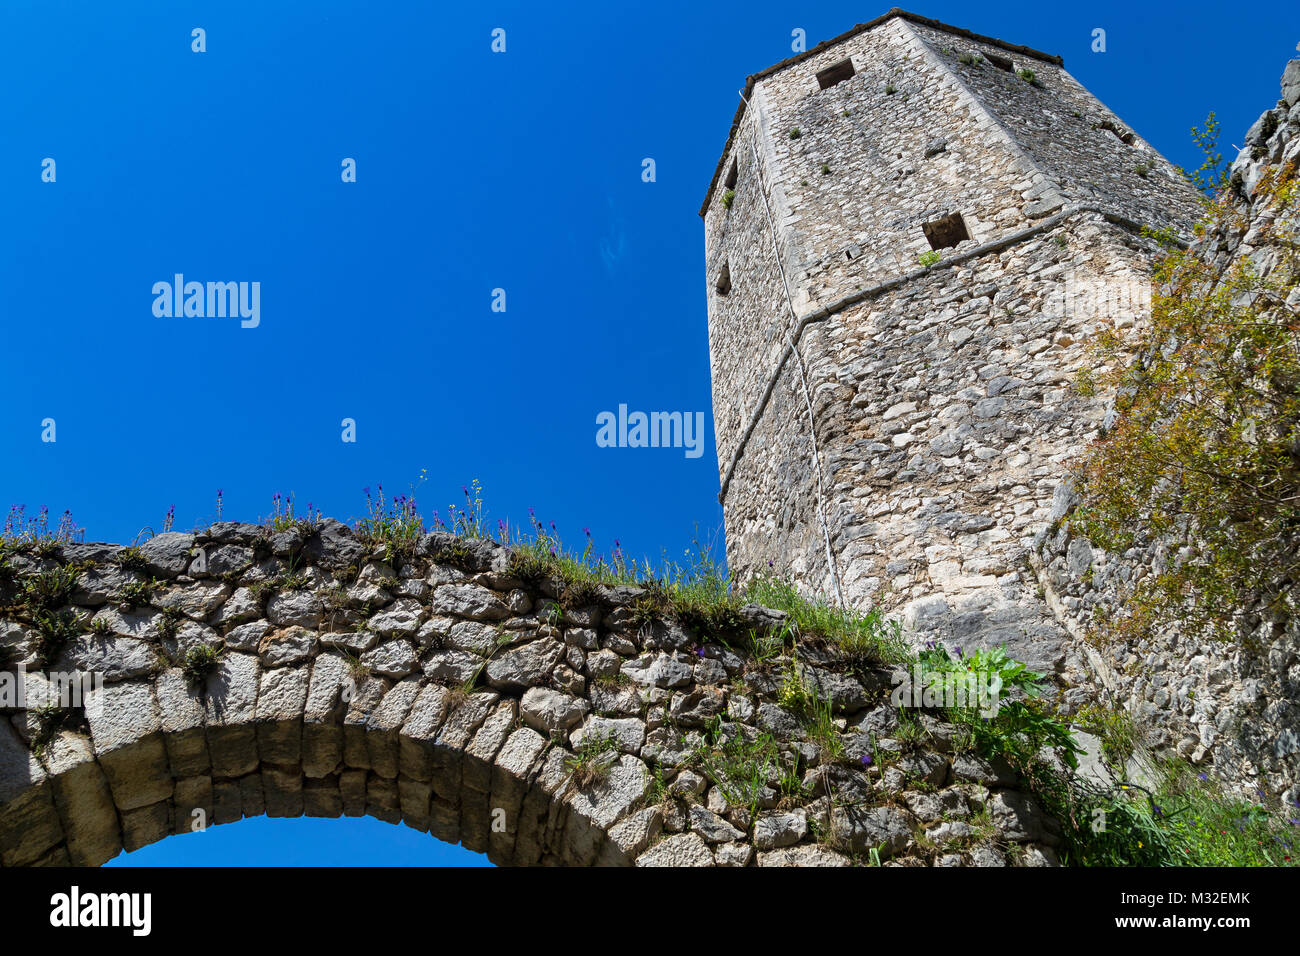 The Medieval Town of Pocitelj, Bosnia & Herzegovina Stock Photo